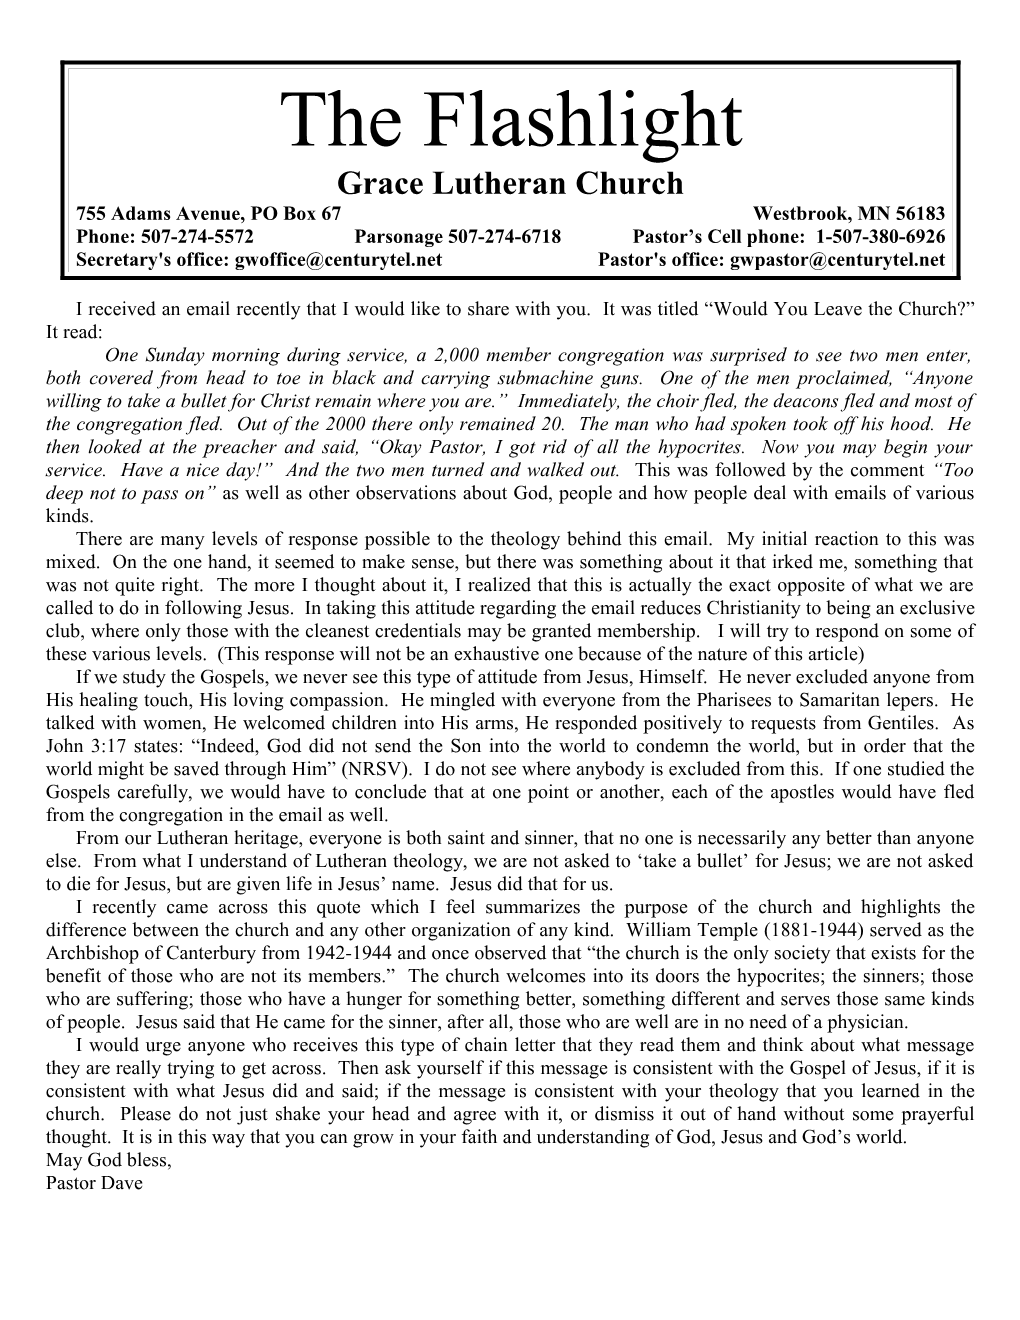 Grace Lutheran Church s2